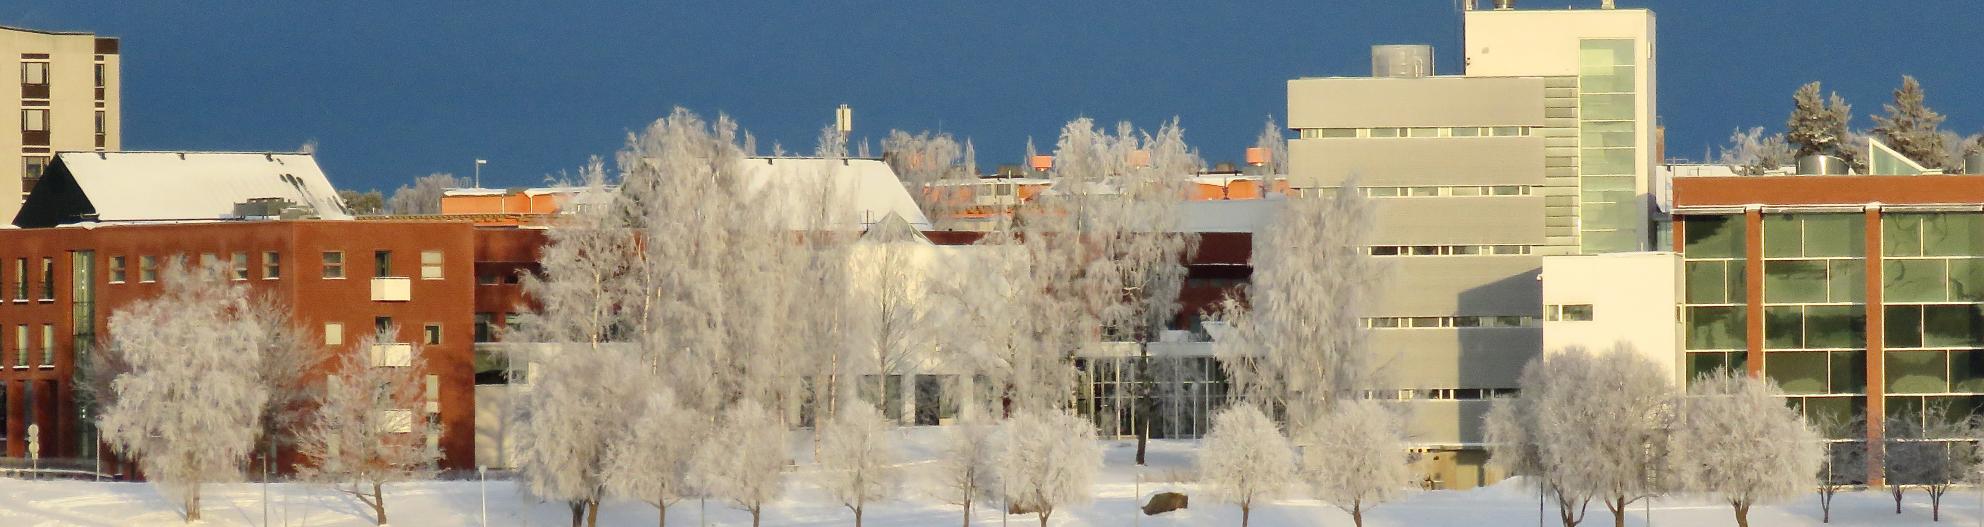 Campus at winter